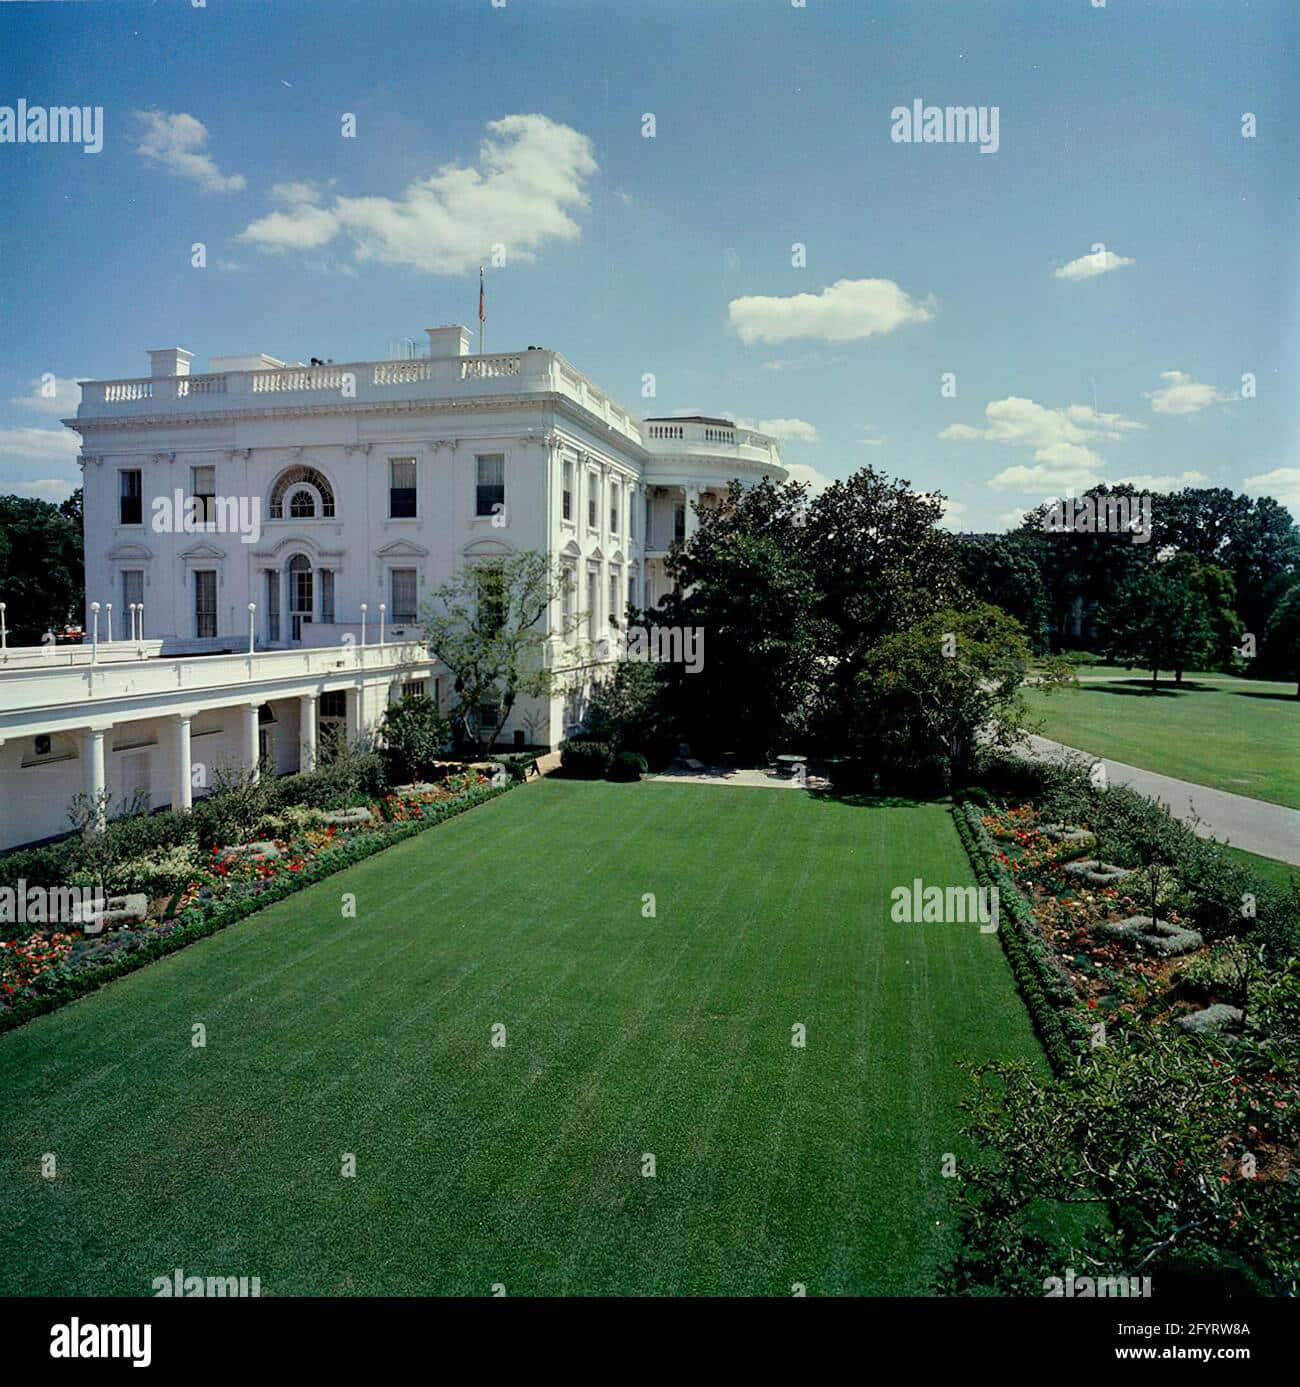 The White House In Washington Dc - Stock Image